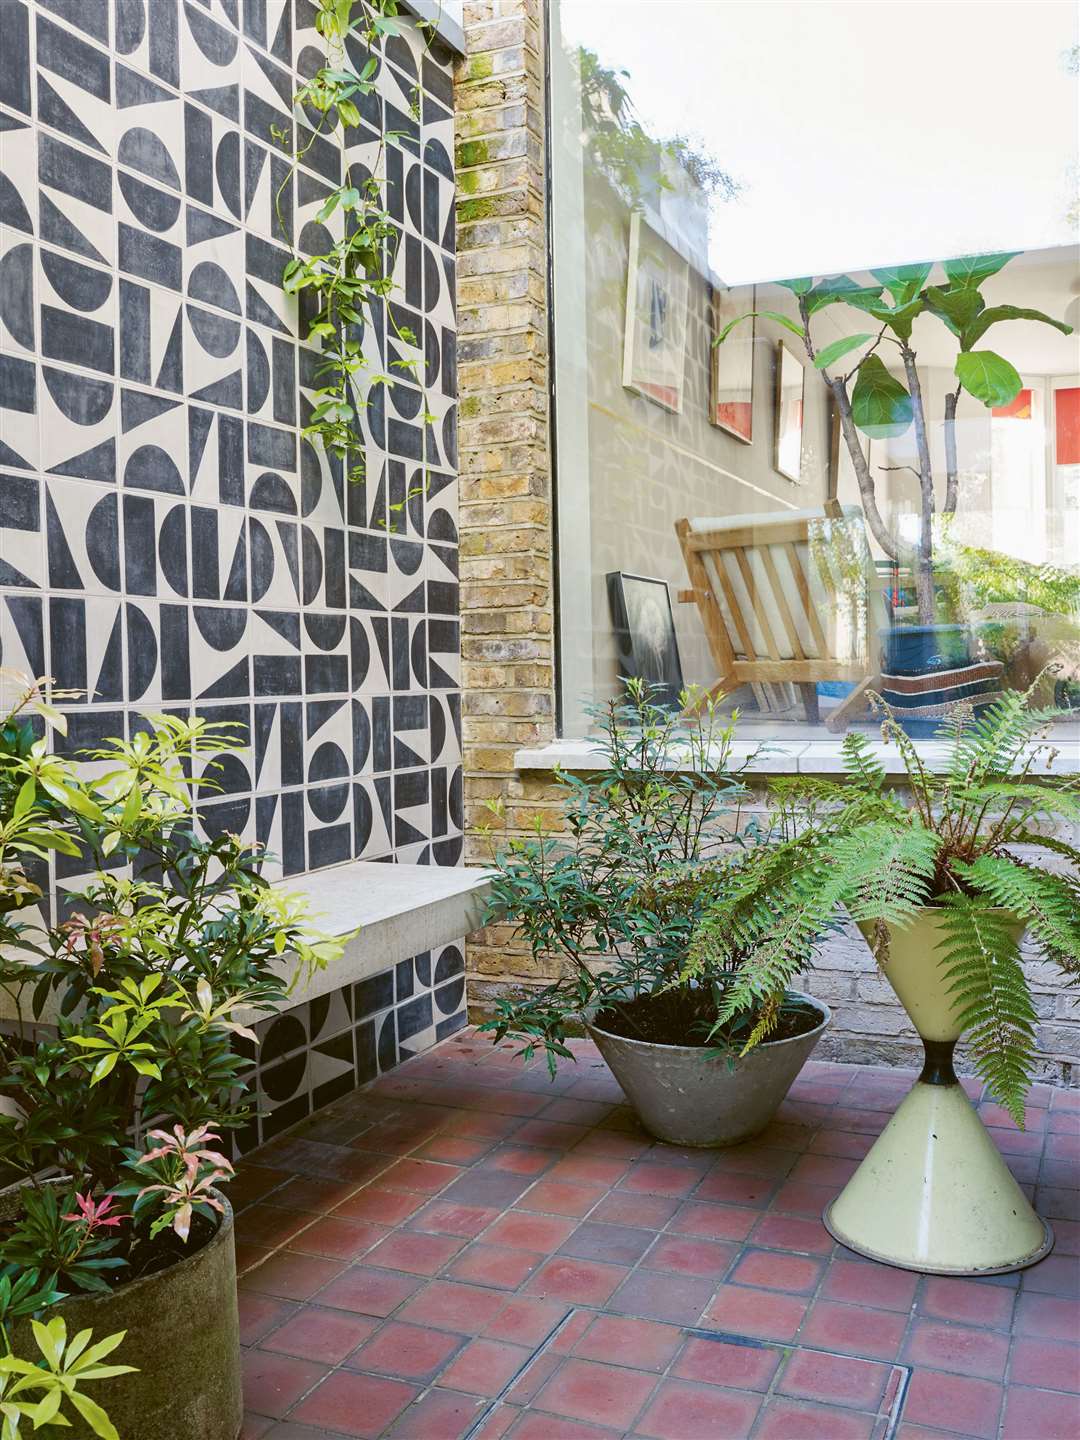 Create a contemporary Mediterranean garden using graphic tiles. Picture: Jason Ingram/Mitchell Beazley/PA